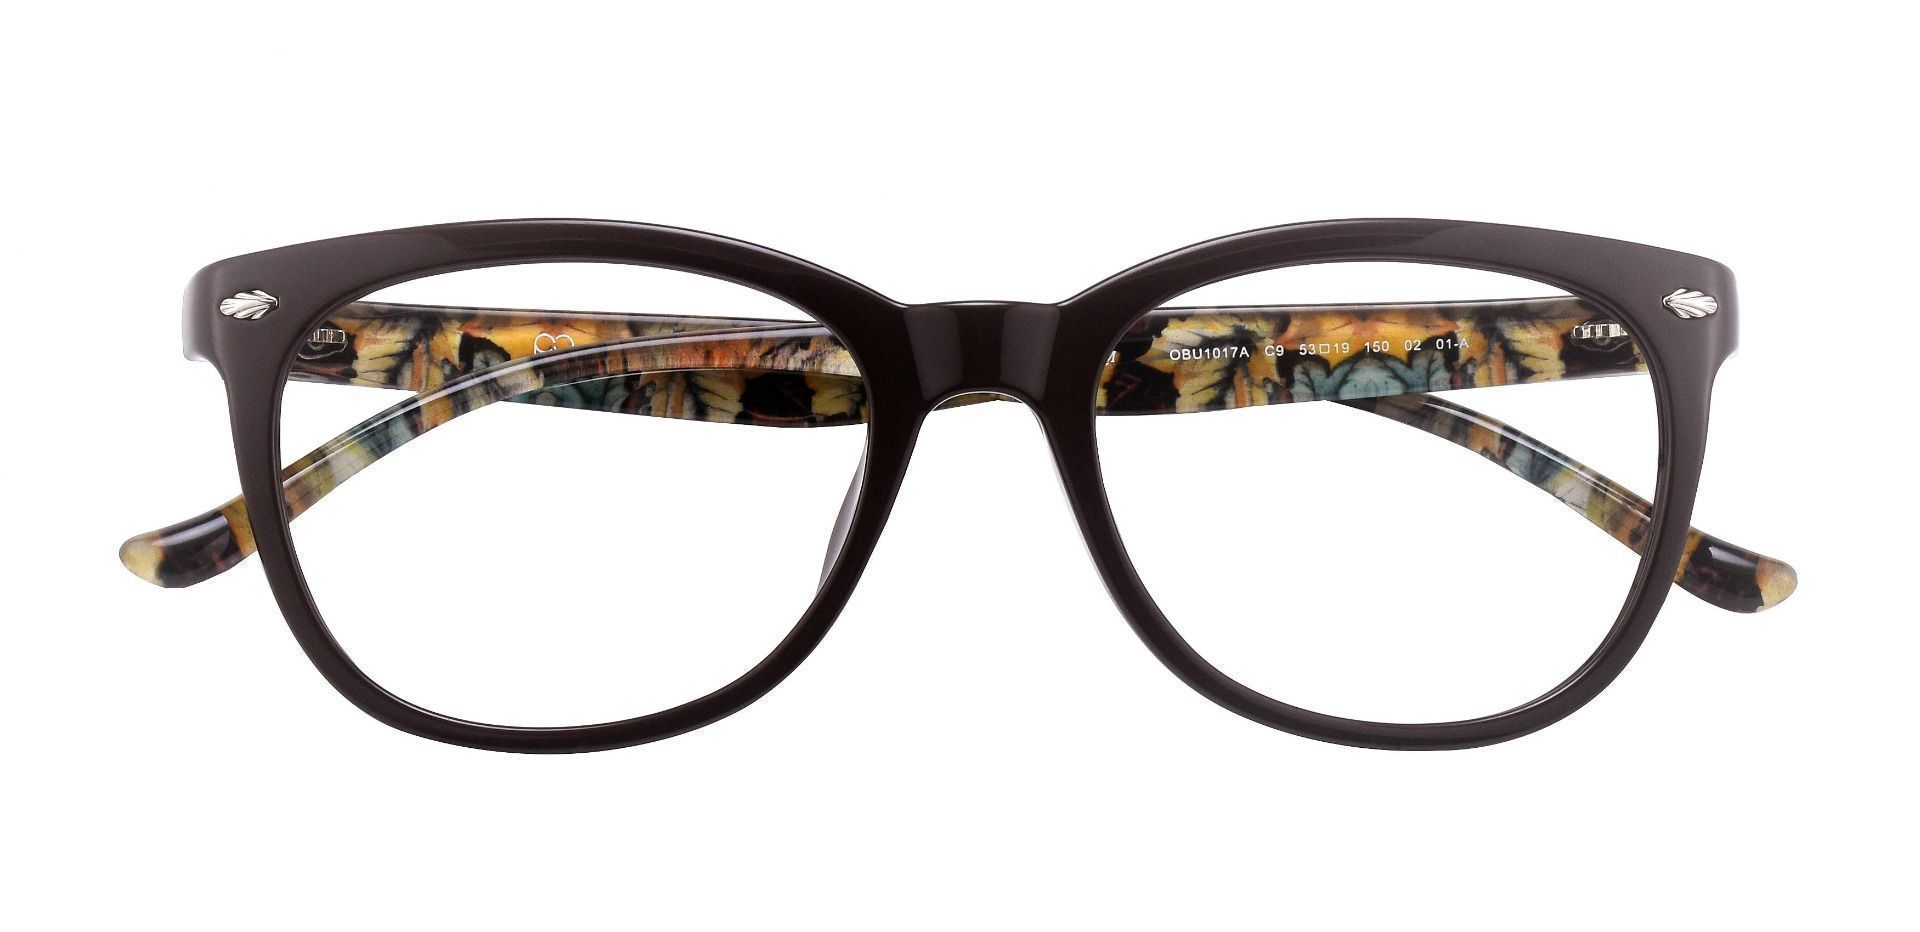 Monet Oval Eyeglasses Frame - Brown